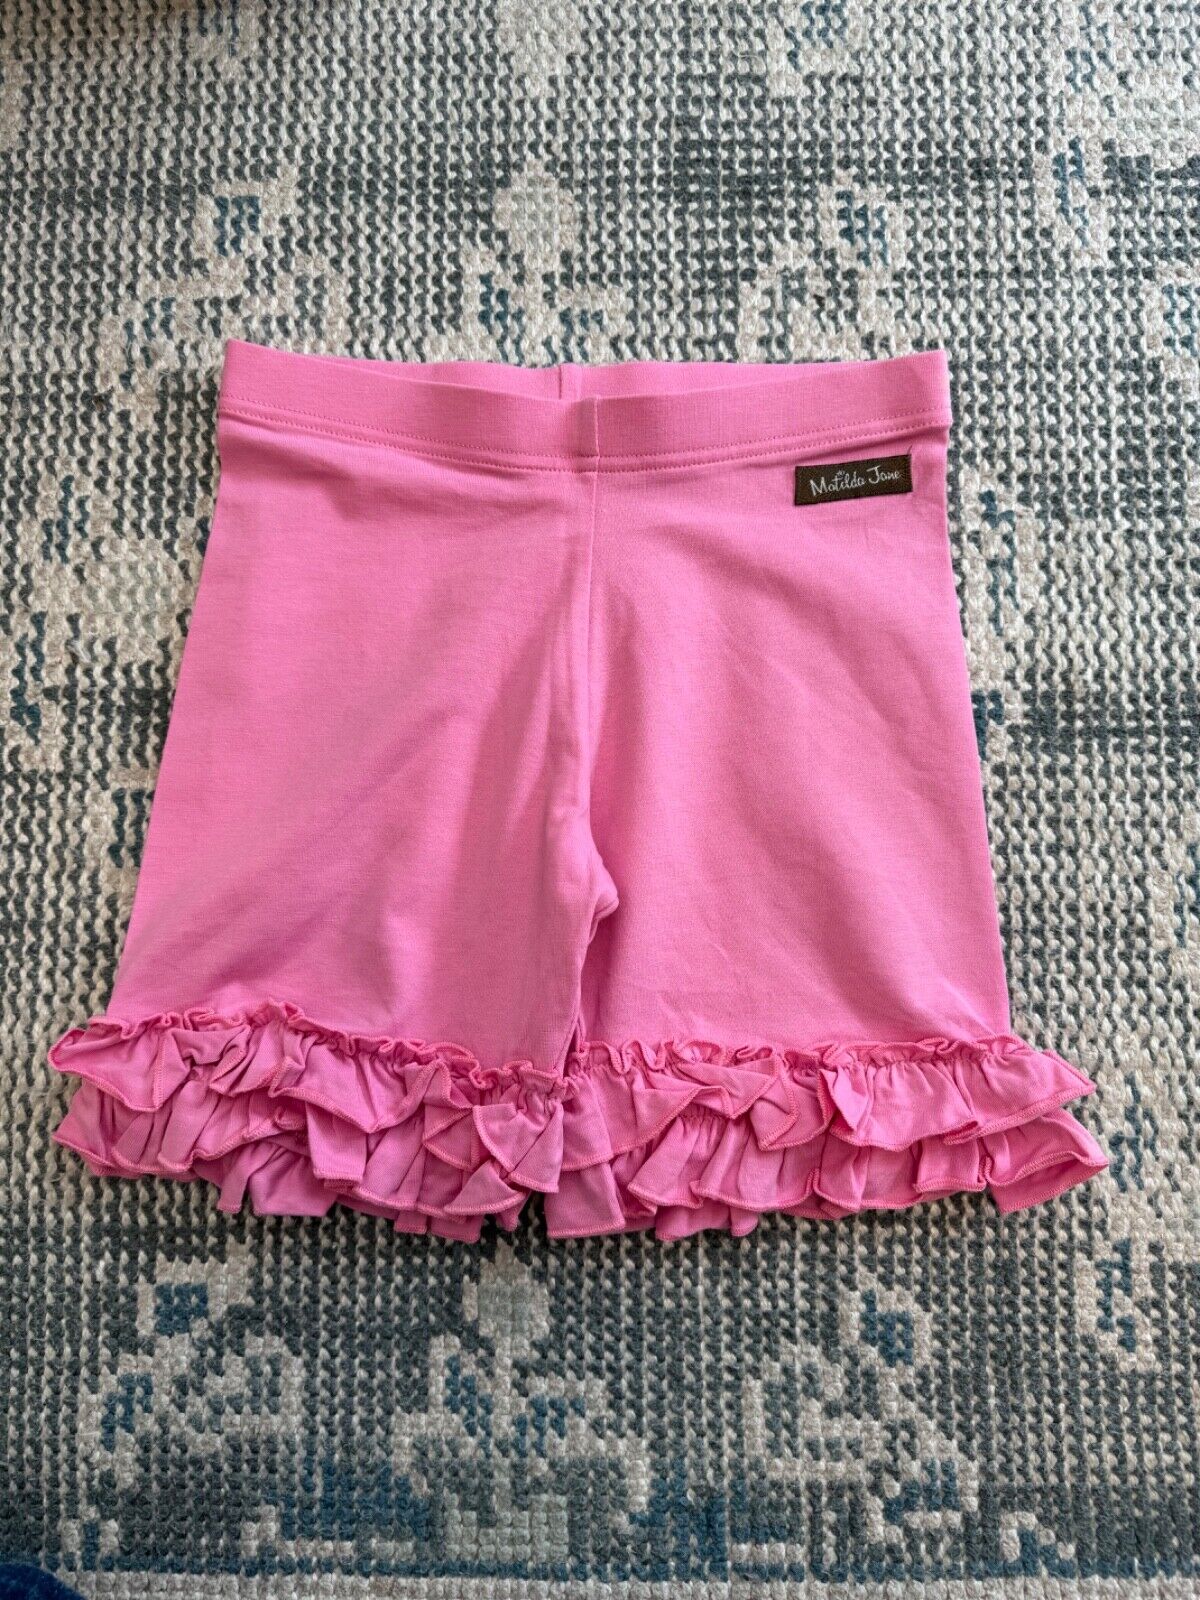 New matilda jane pink shorts size 8